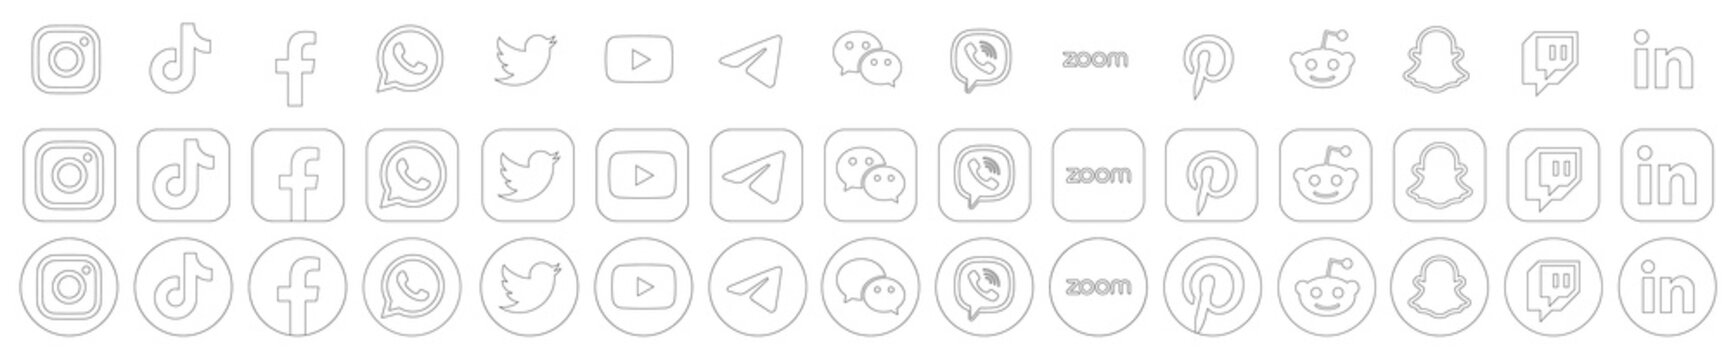 Instagram, TikTok, Facebook, Whatsapp, Twitter, YouTube, Telegram, Zoom, Viber, WeChat, Twitch, Snapchat, Pinterest, Reddit and LinkedIn app icons. Set of black and white outline logos